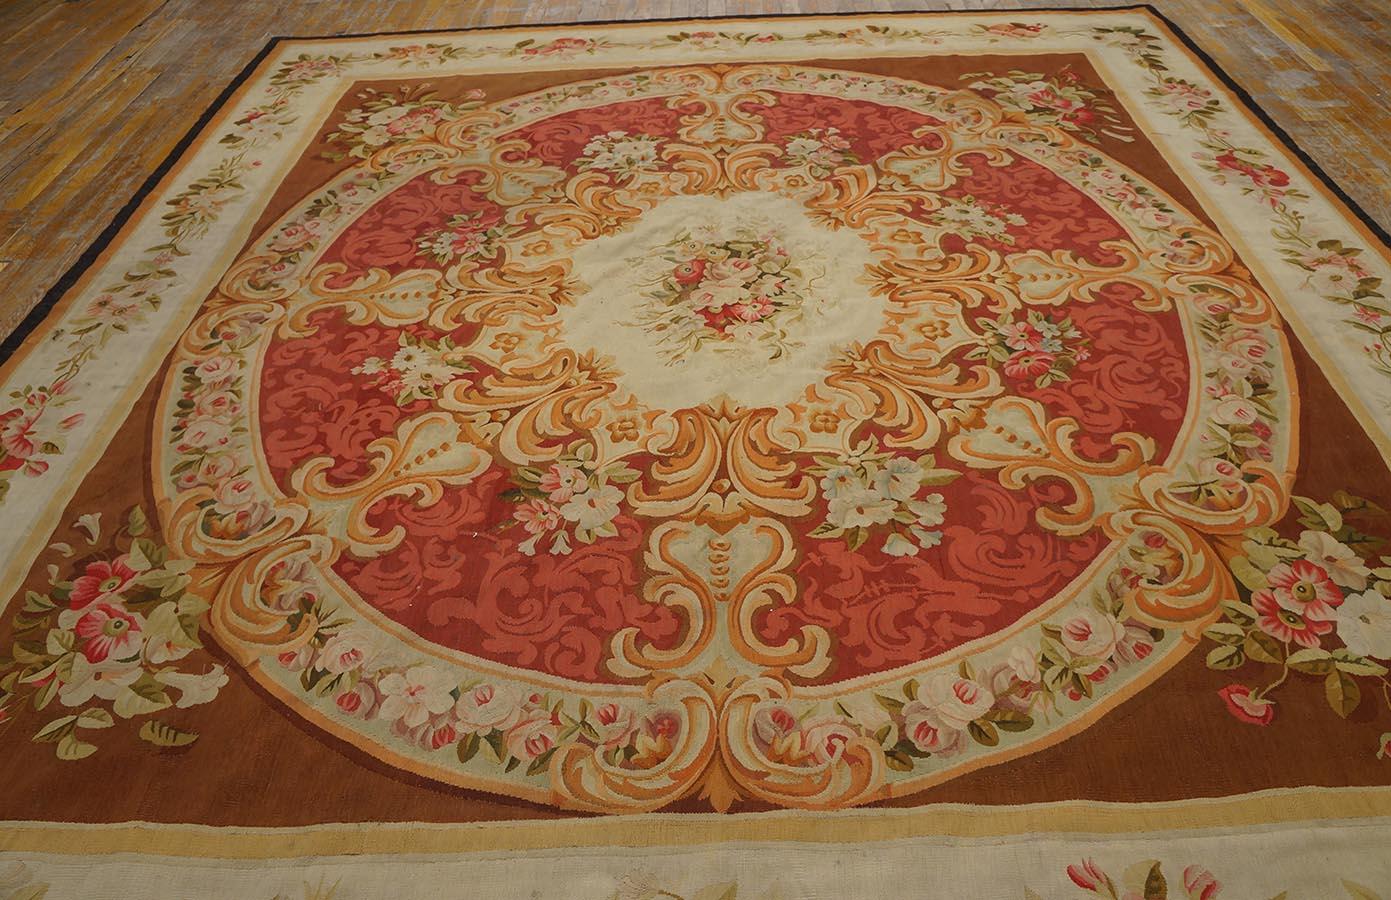 Late 19th Century French Aubusson Carpet Circa 1870s (9'2